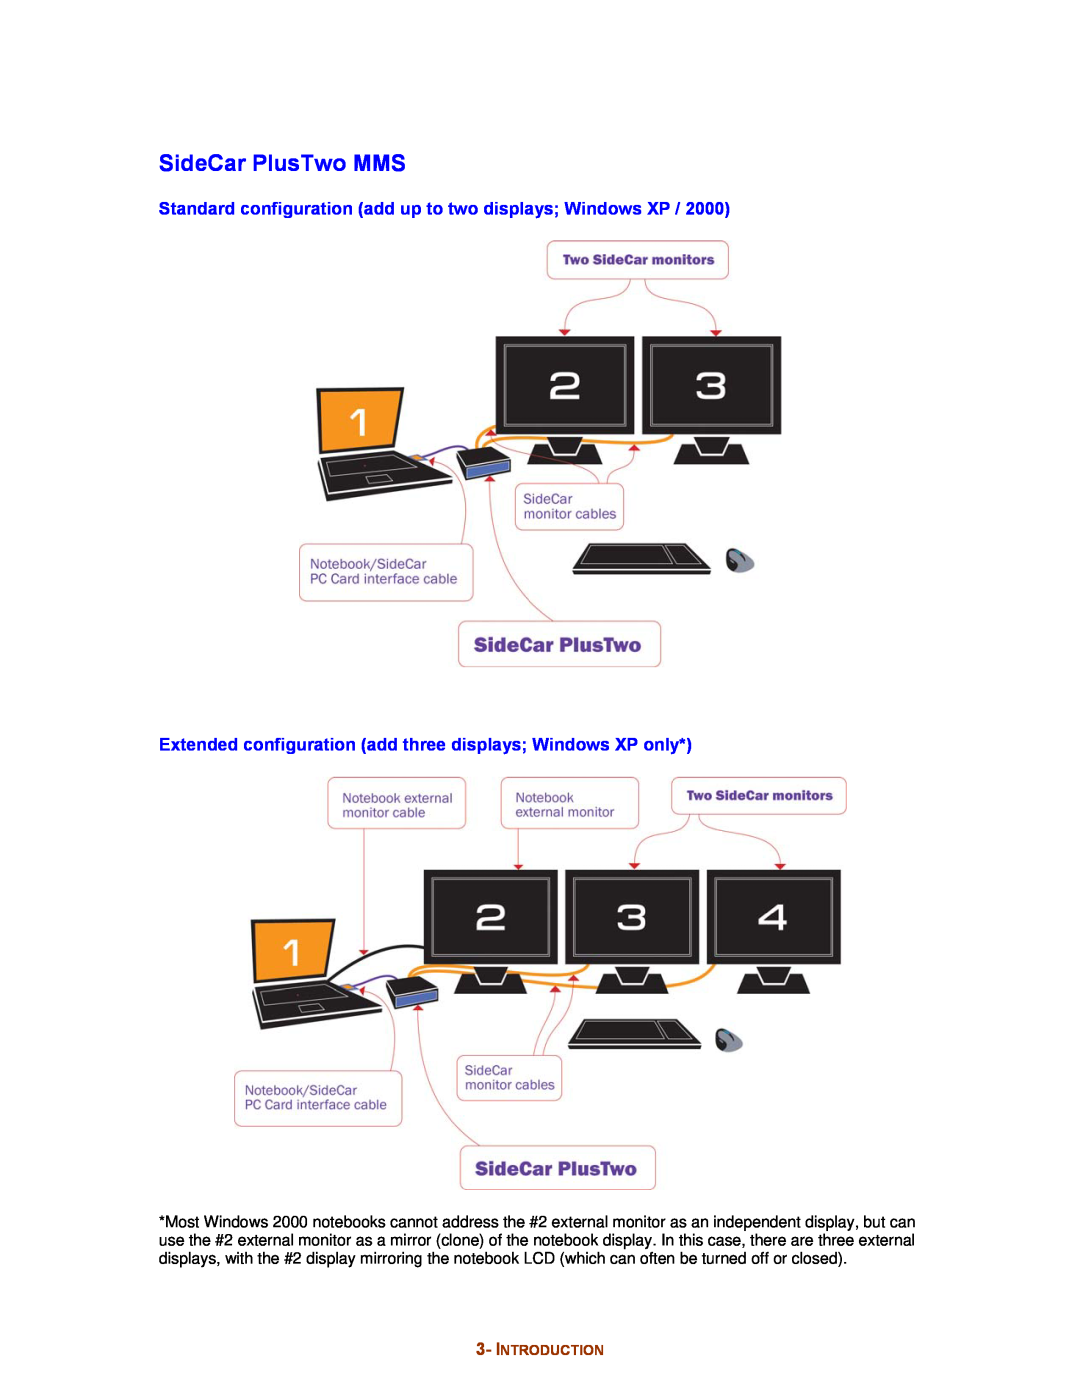 Digital Tigers SideCar MMS Series manual SideCar PlusTwo MMS, Standard configuration add up to two displays Windows XP 